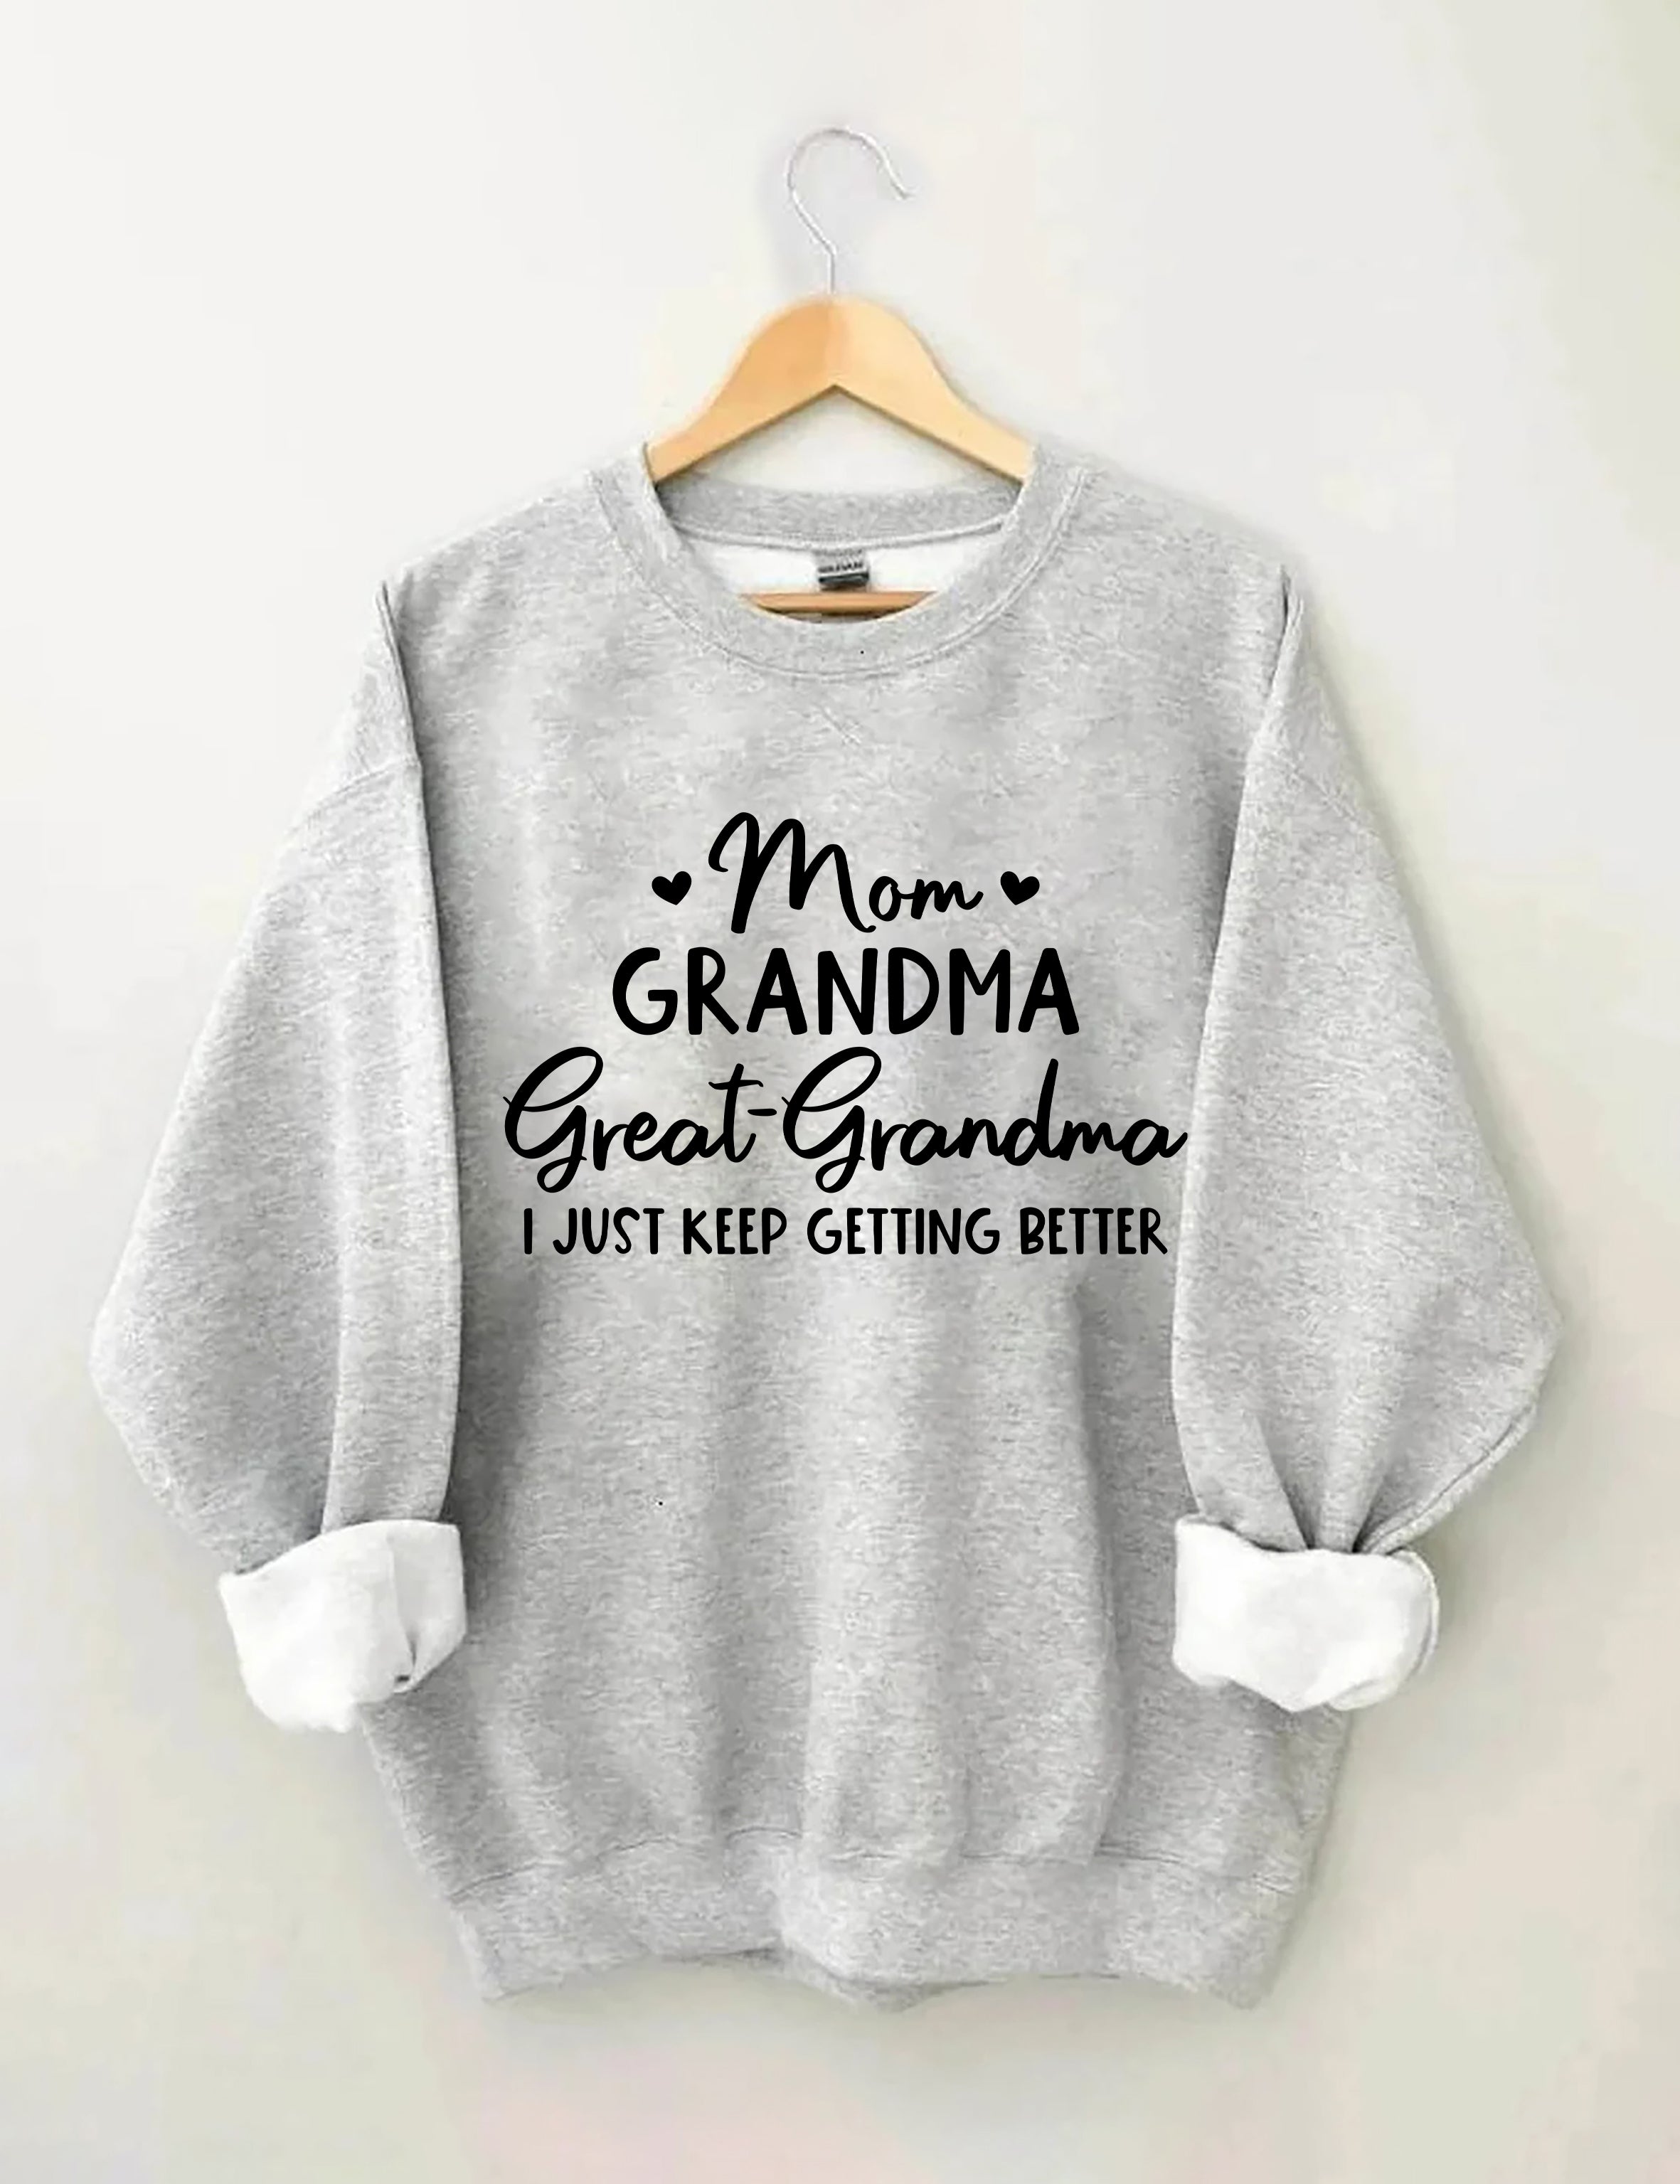 Mom Grandma Great-Grandma Sweatshirt